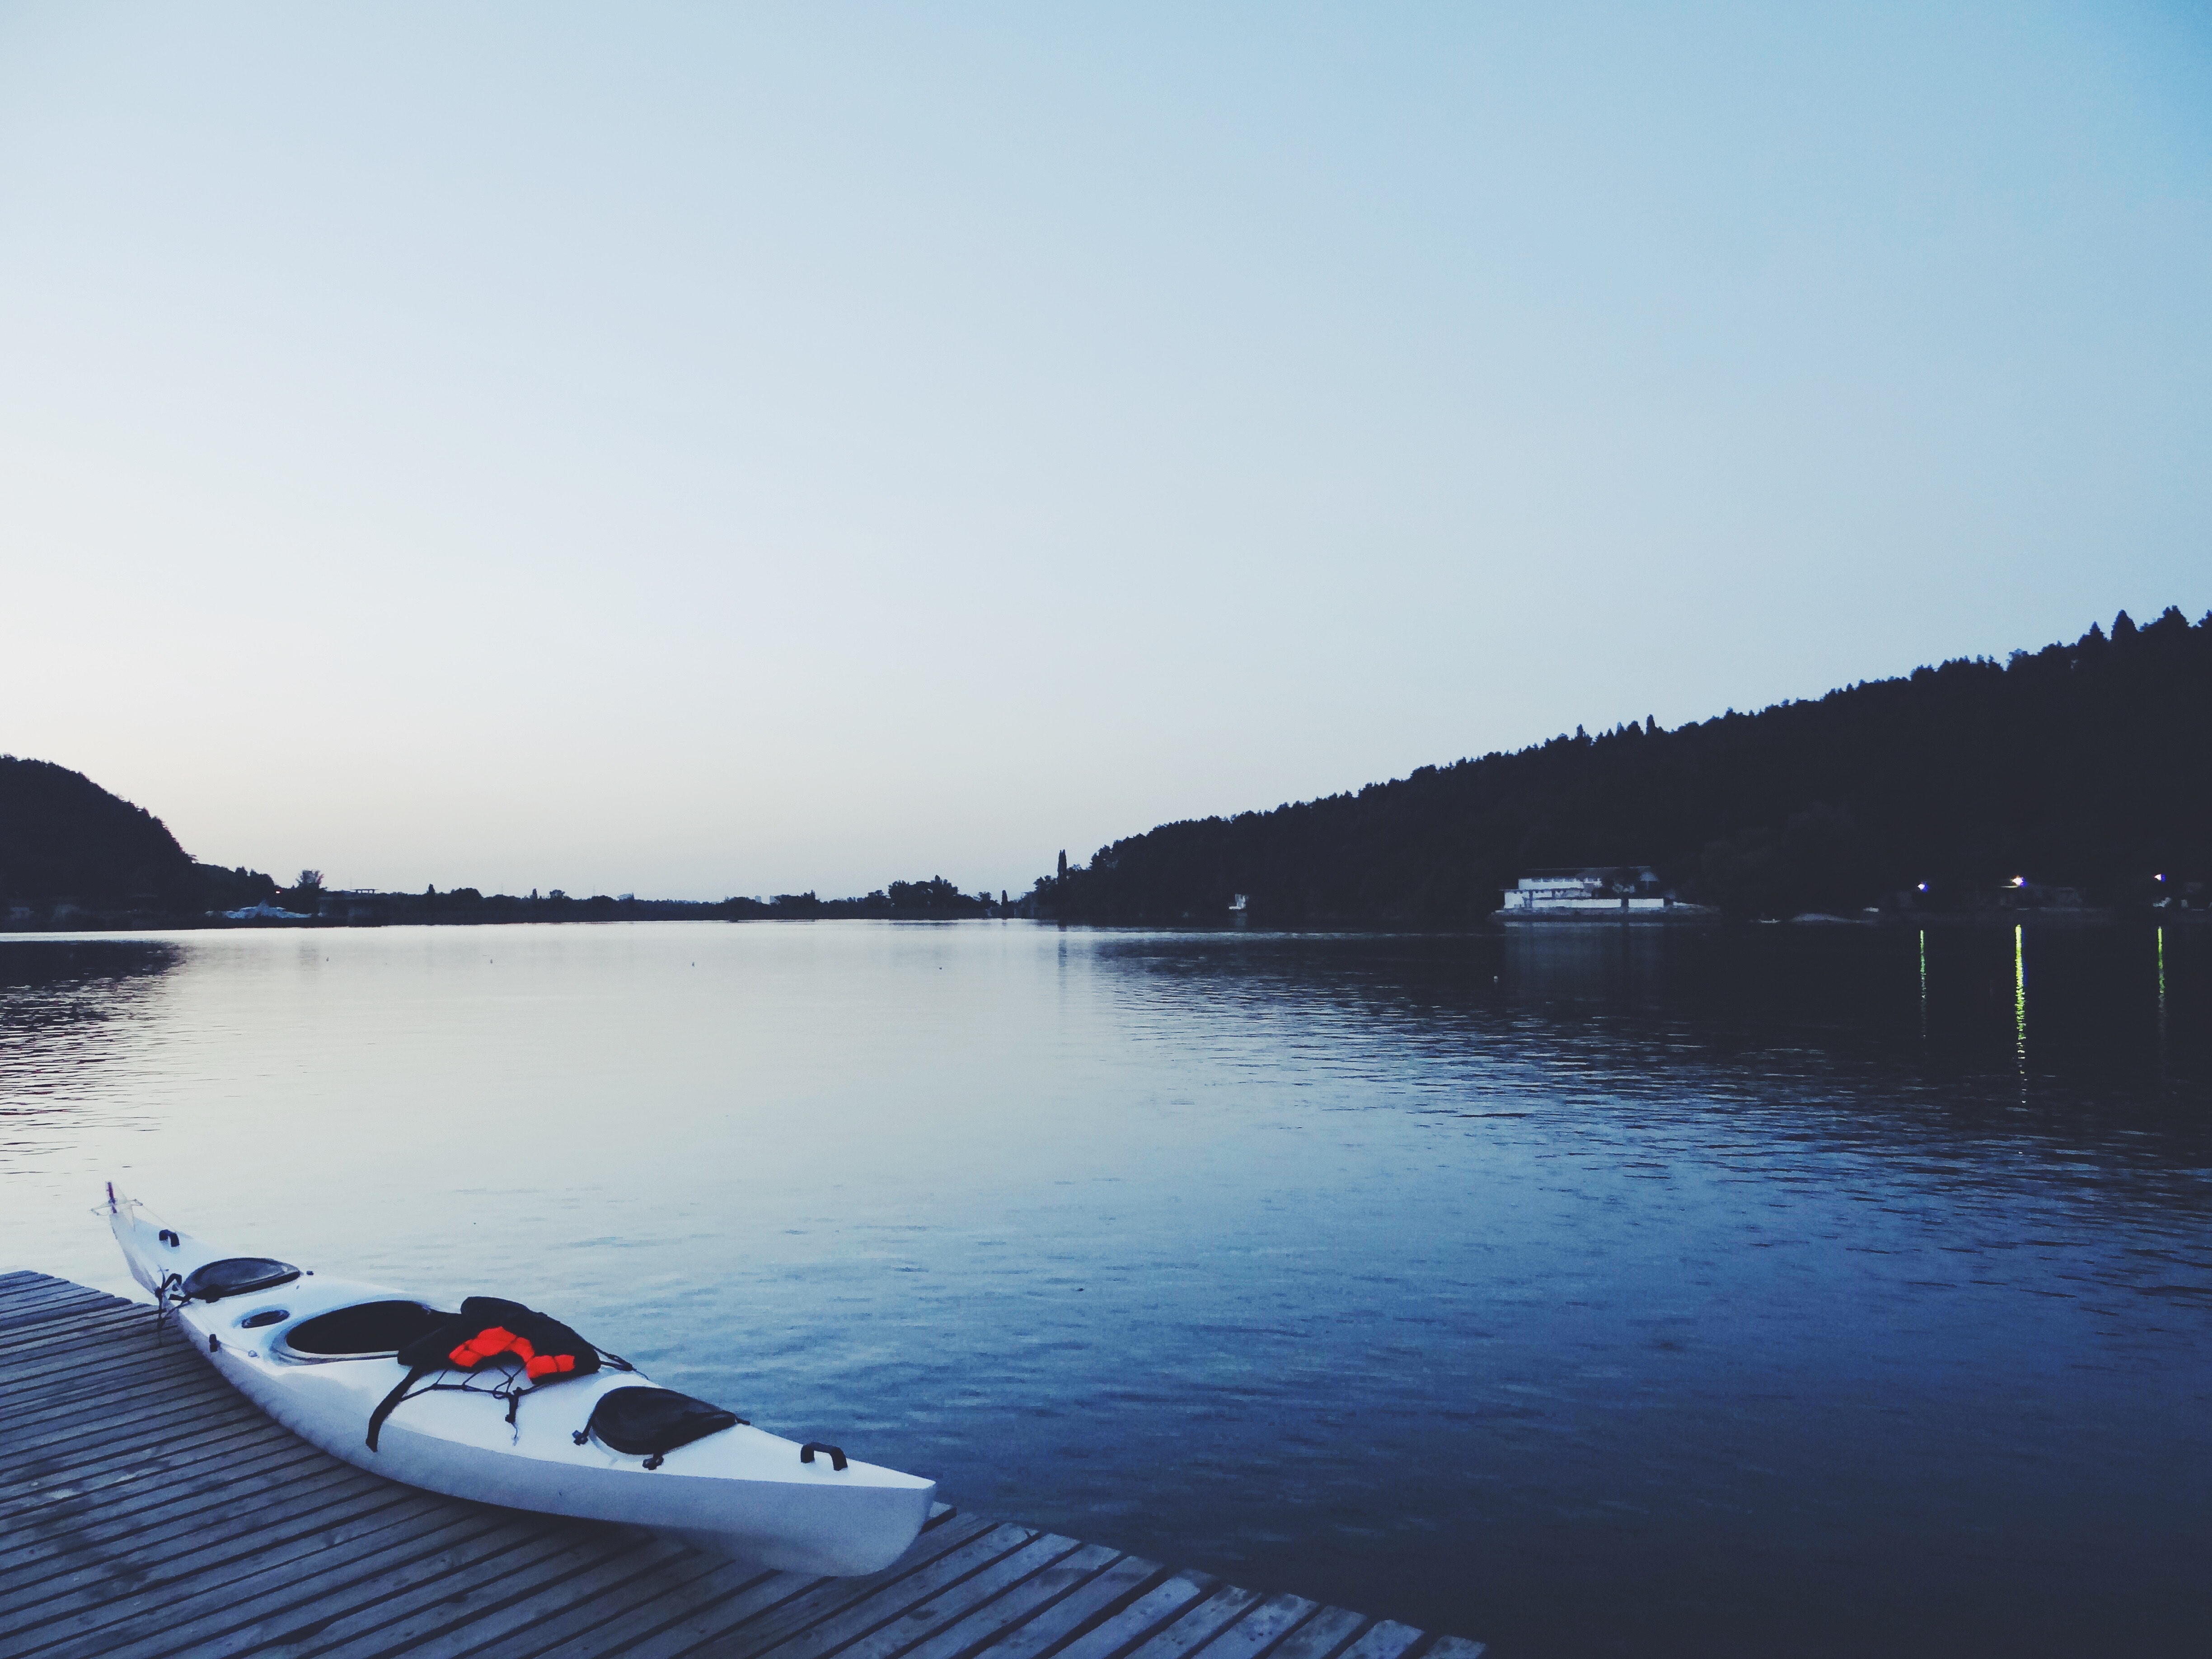 White Kayak on Brown Wooden Dock · Free Stock Photo